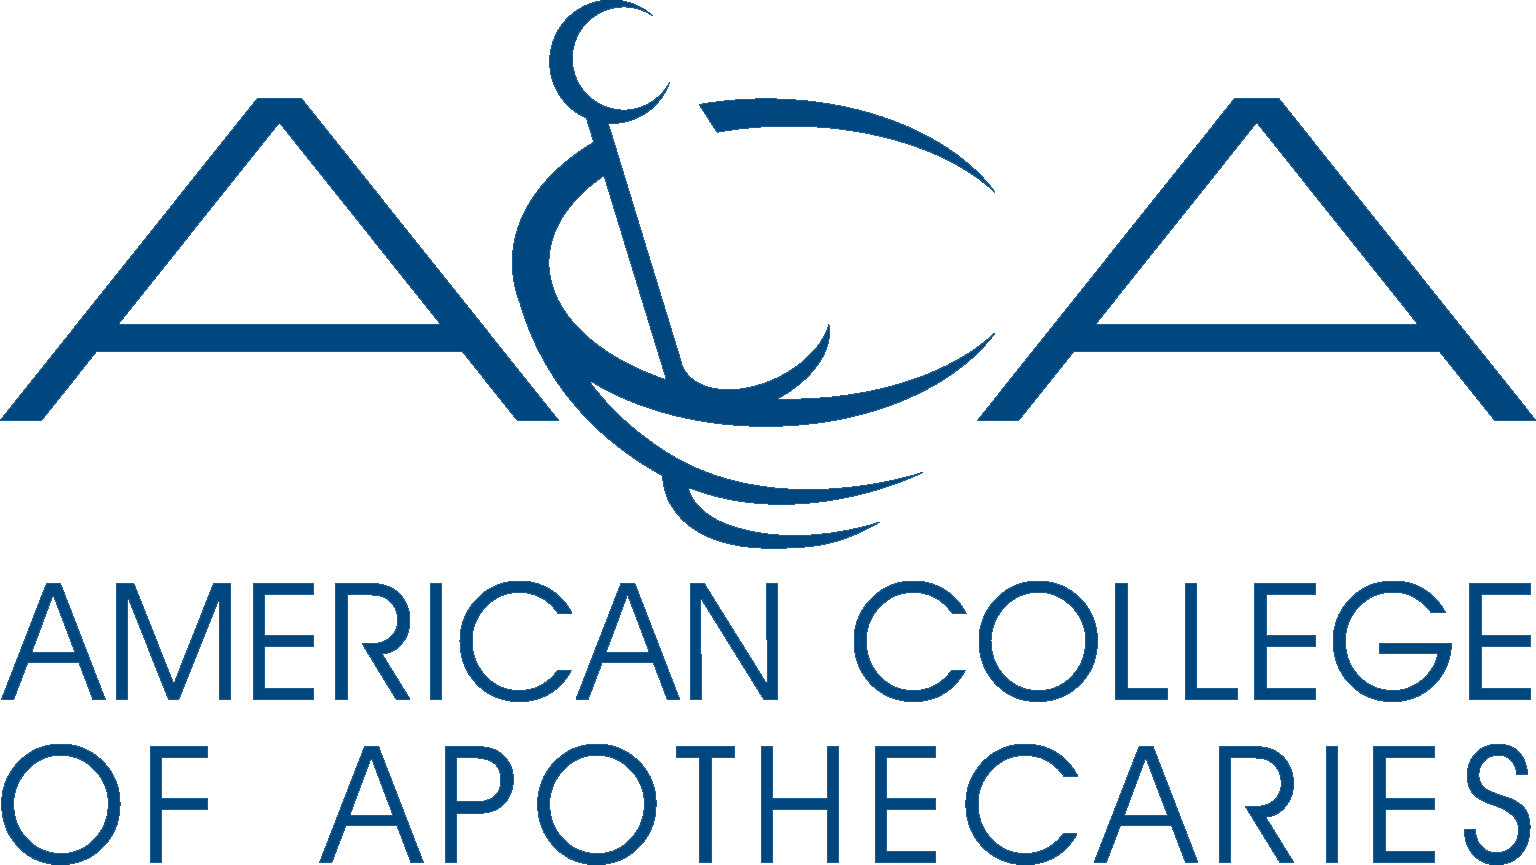 ACA (American College of Apothecaries) logo